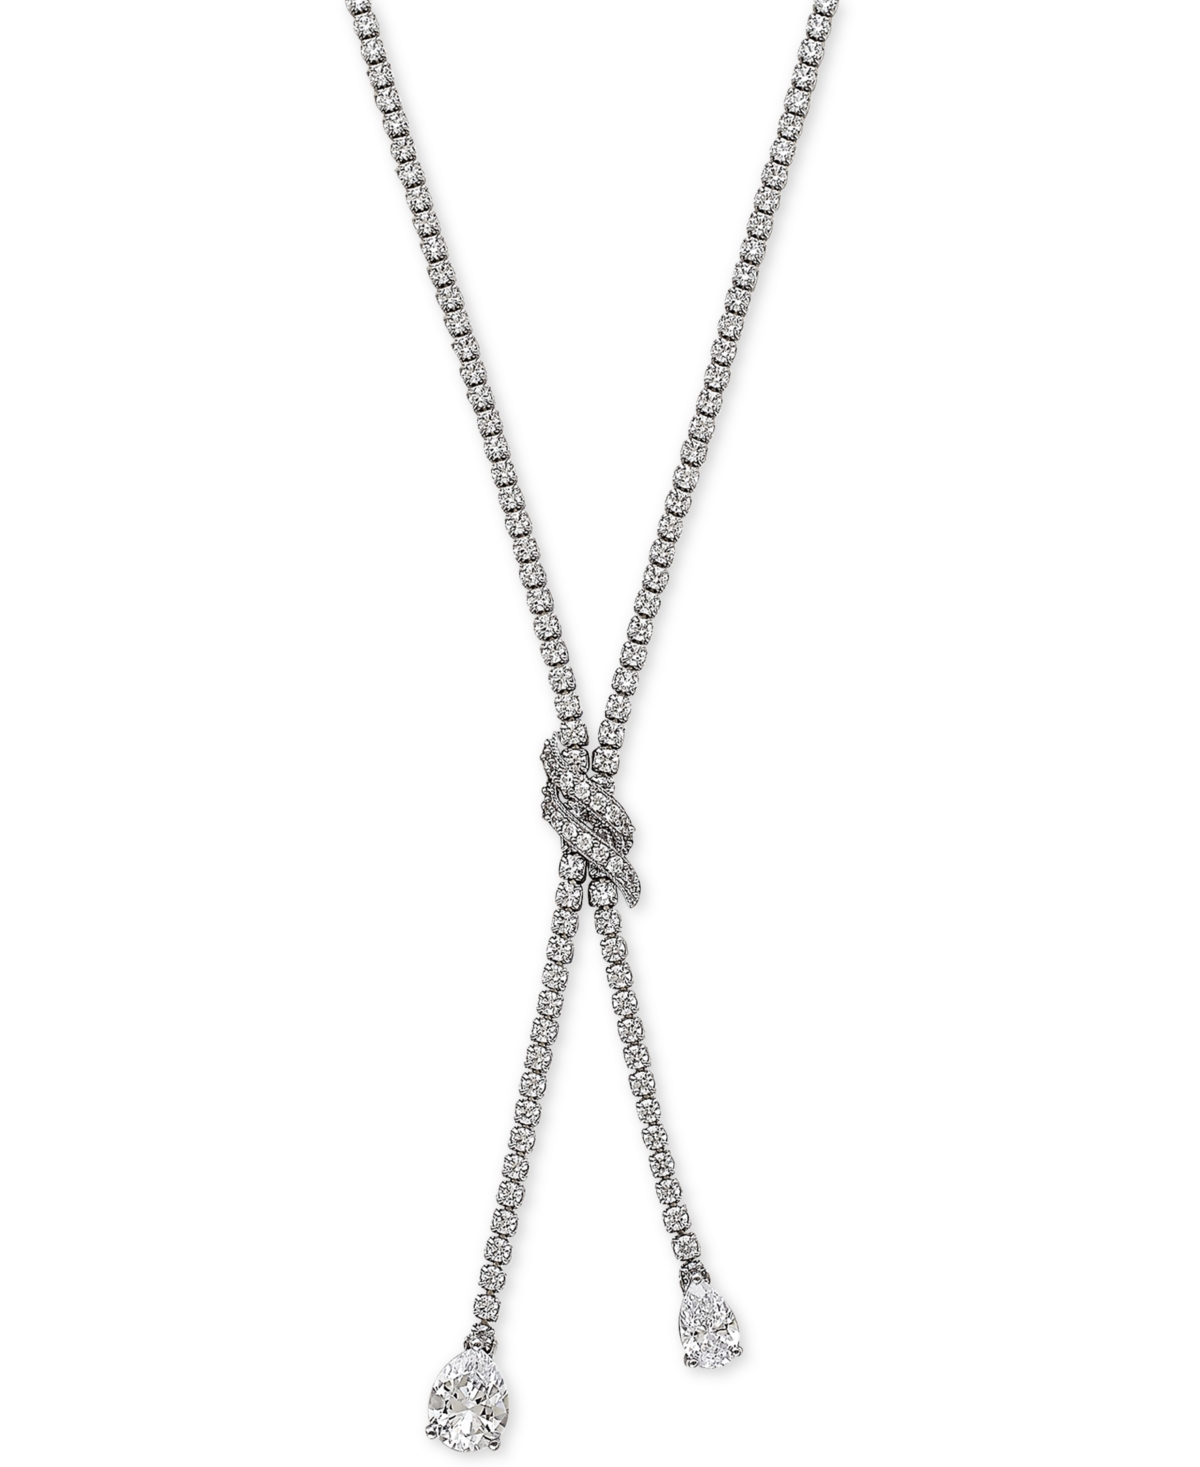 Arabella Cubic Zirconia Lariat Necklace in Sterling Silver